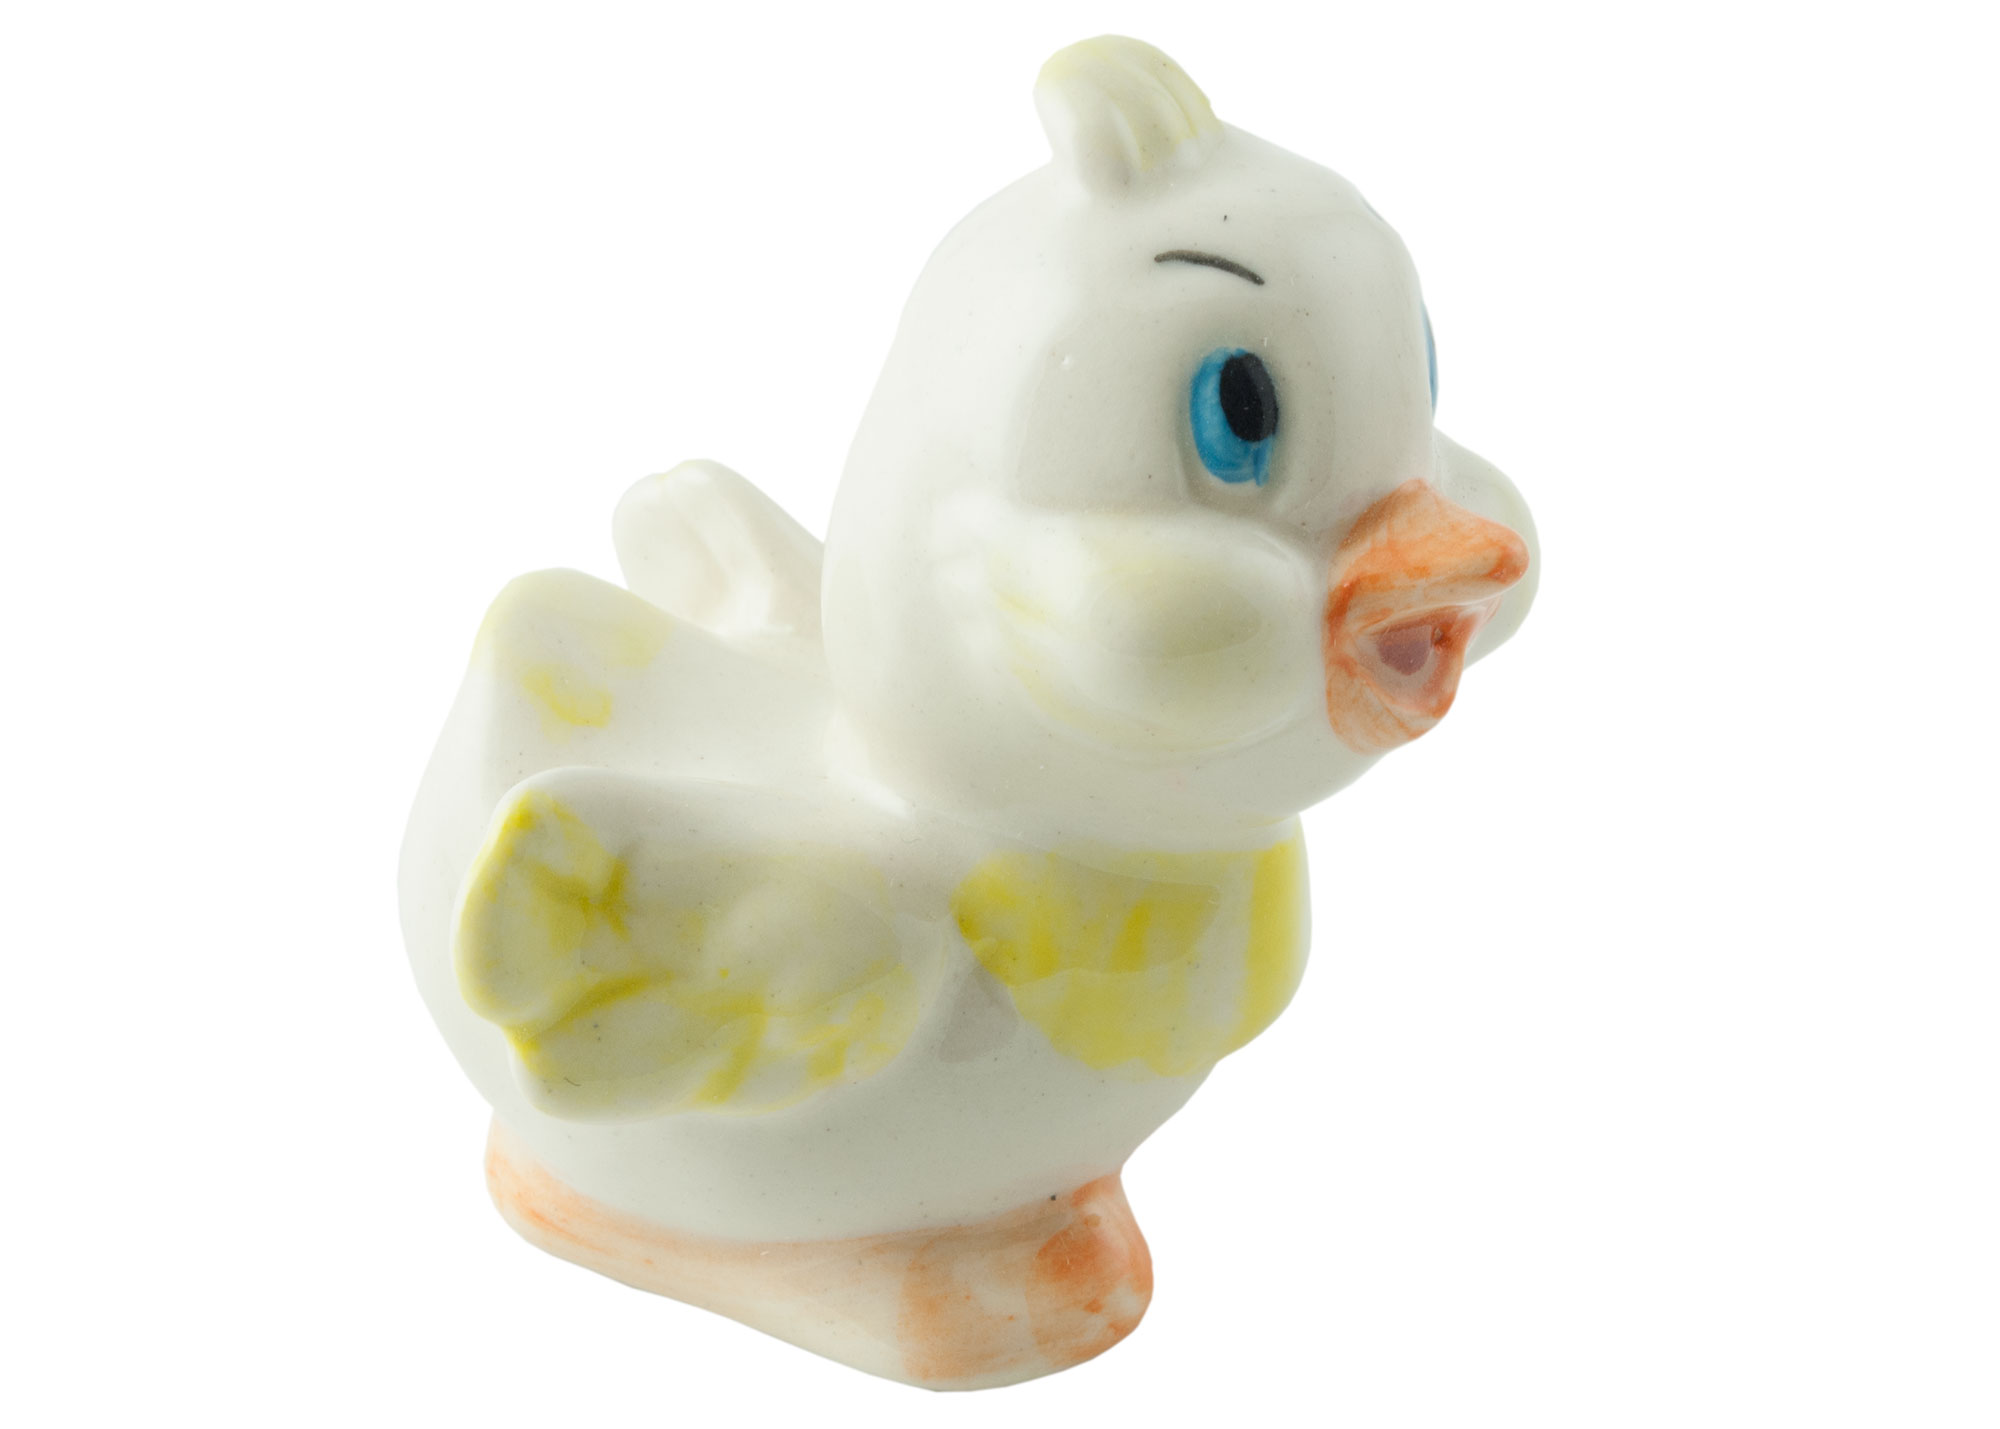 Buy Cheery Chick Porcelain Figurine at GoldenCockerel.com